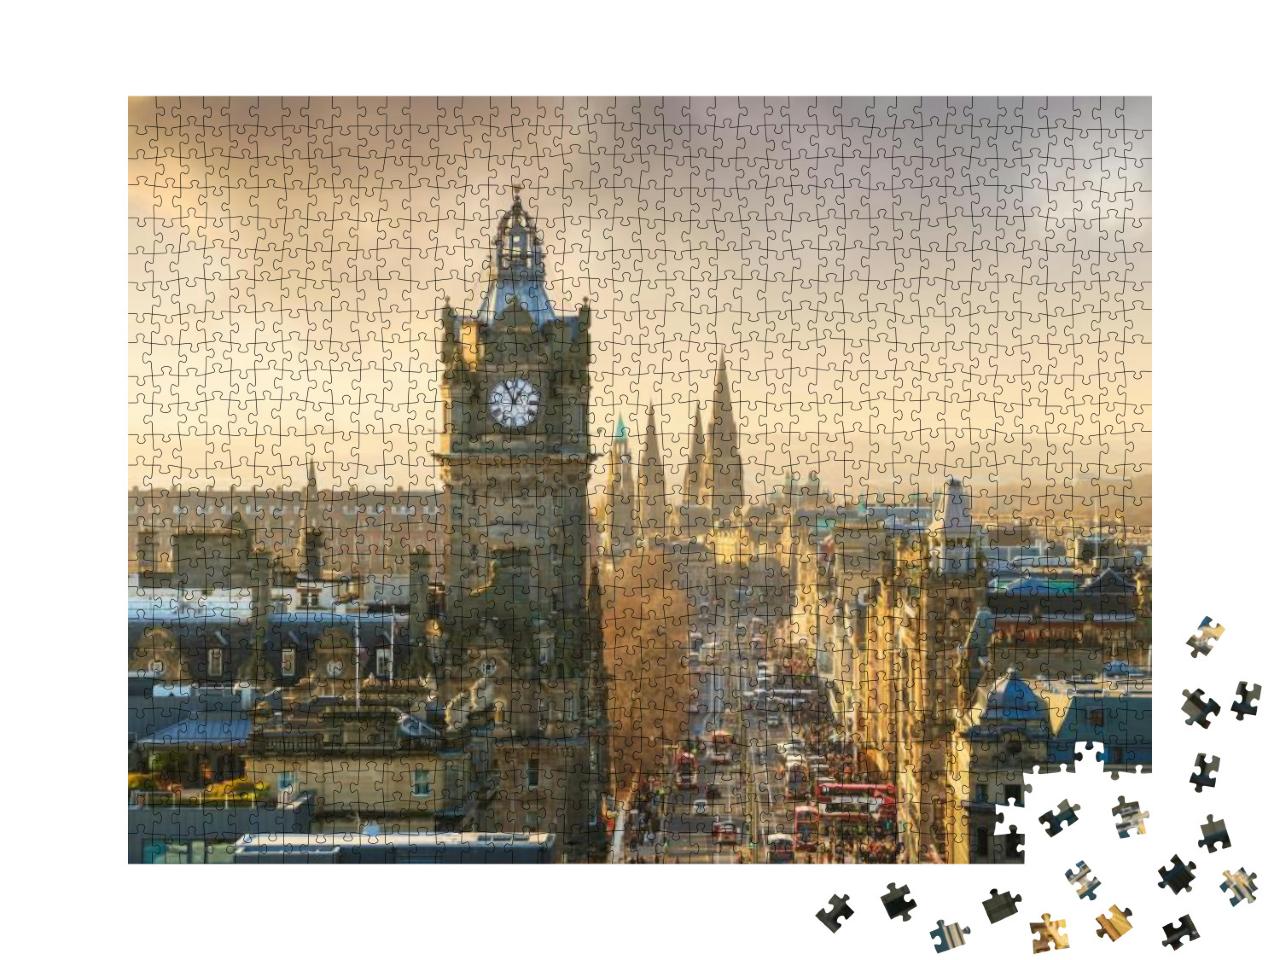 Old Town Edinburgh & Edinburgh Castle in Scotland Uk... Jigsaw Puzzle with 1000 pieces